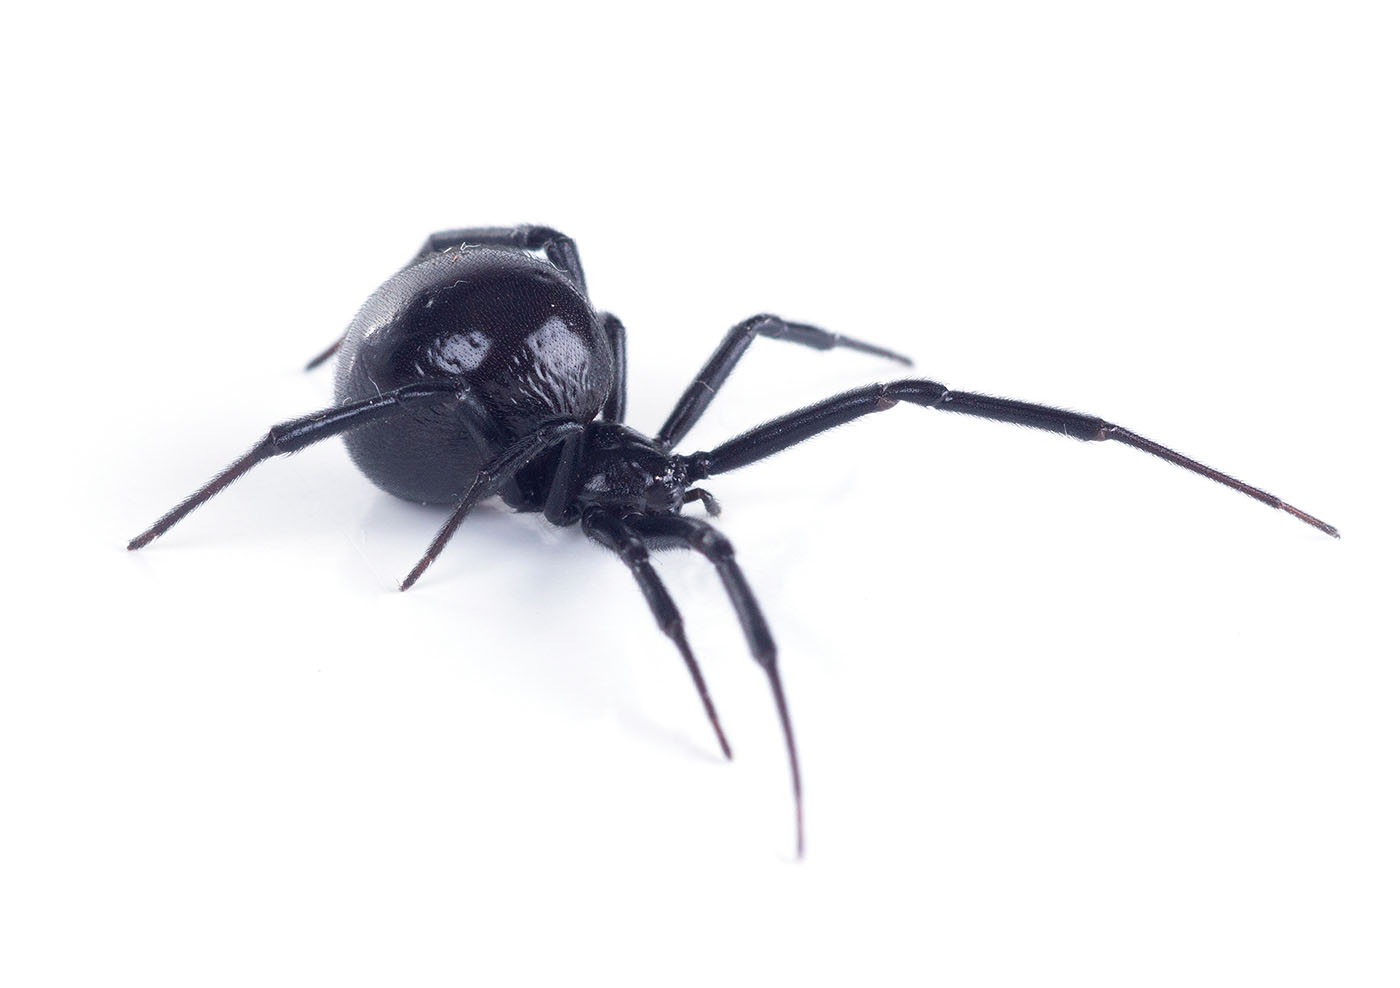 A black spider - contact GGA Pest Management Hillsboro for expert spider identification.